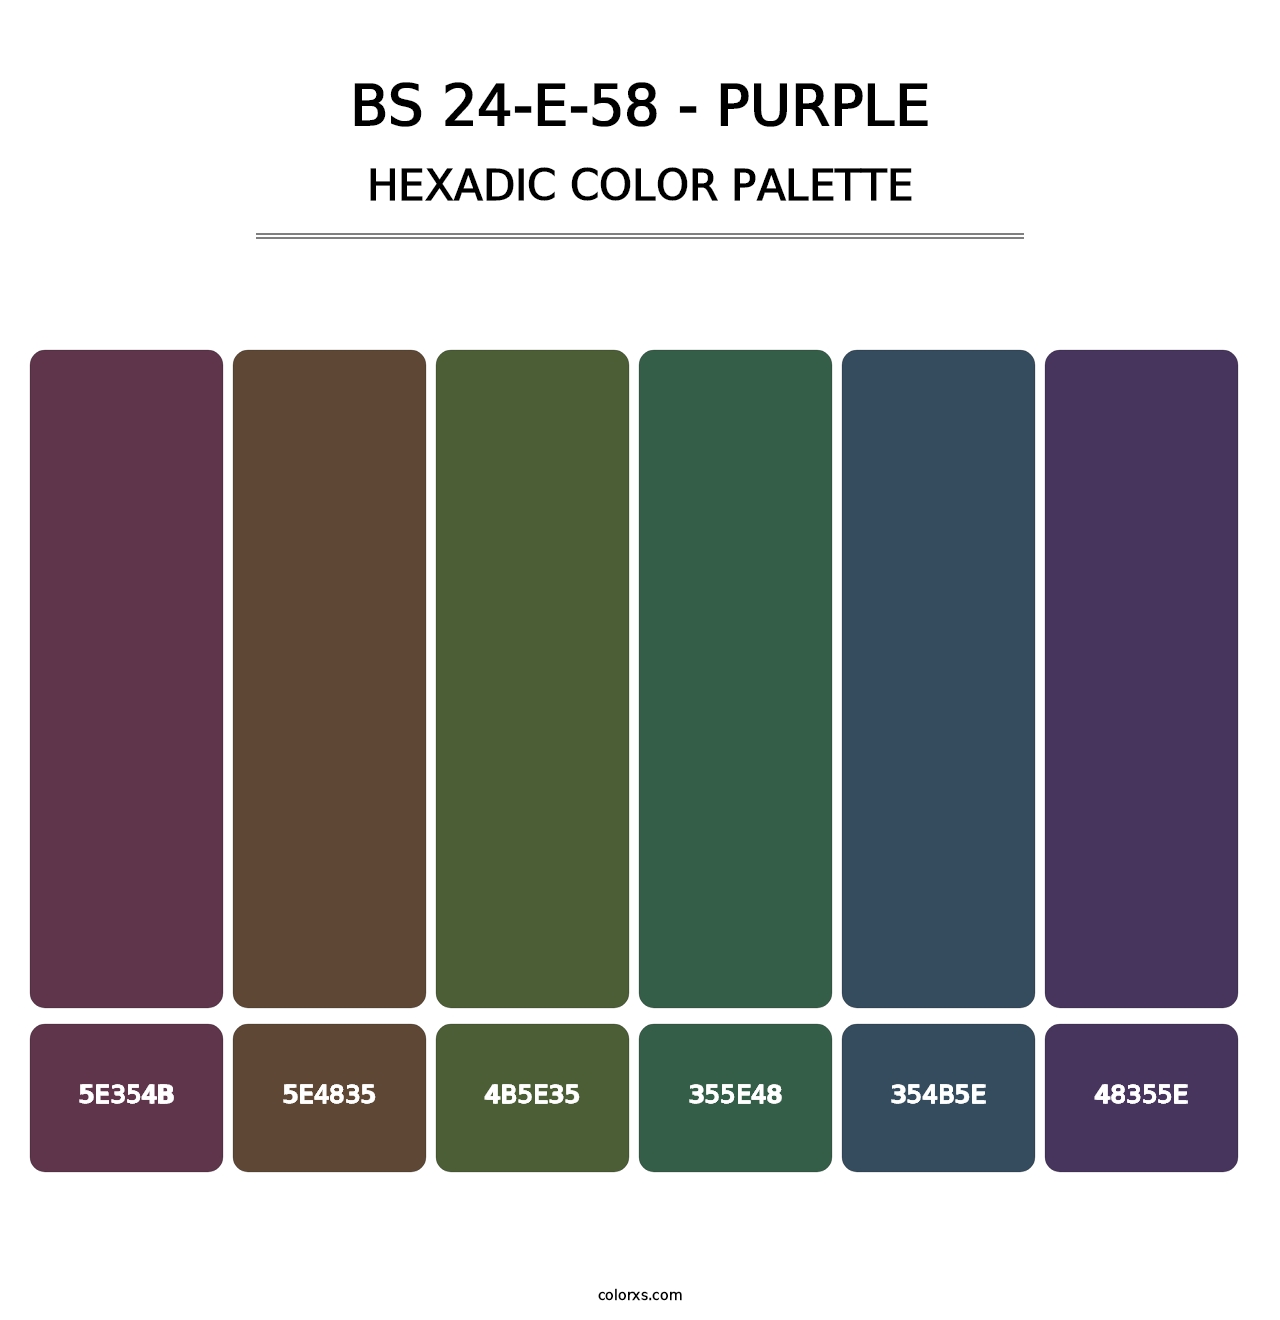 BS 24-E-58 - Purple - Hexadic Color Palette